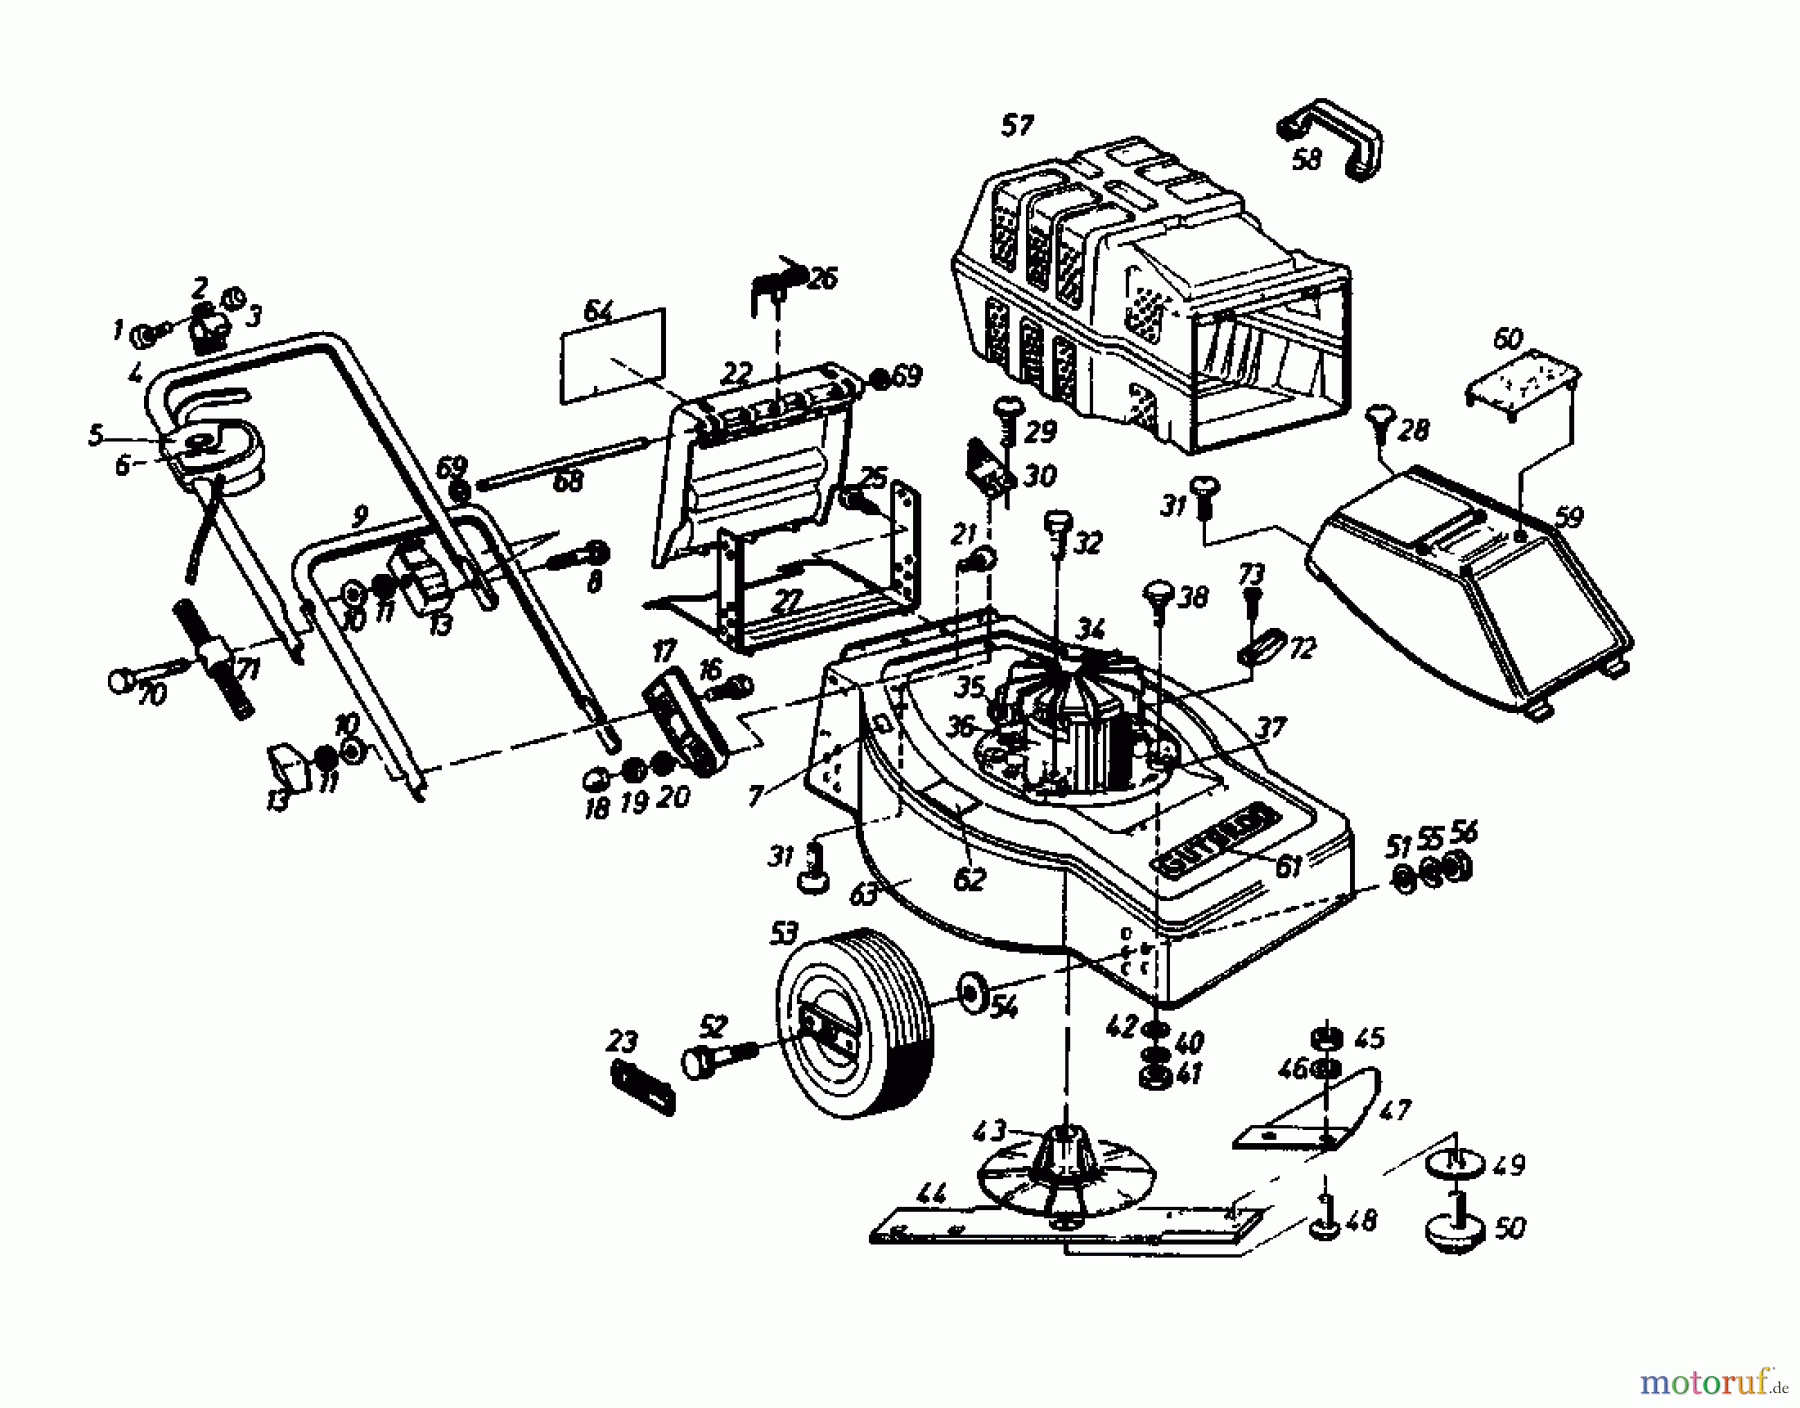  Gutbrod Electric mower TURBO E 02899.01  (1988) Basic machine